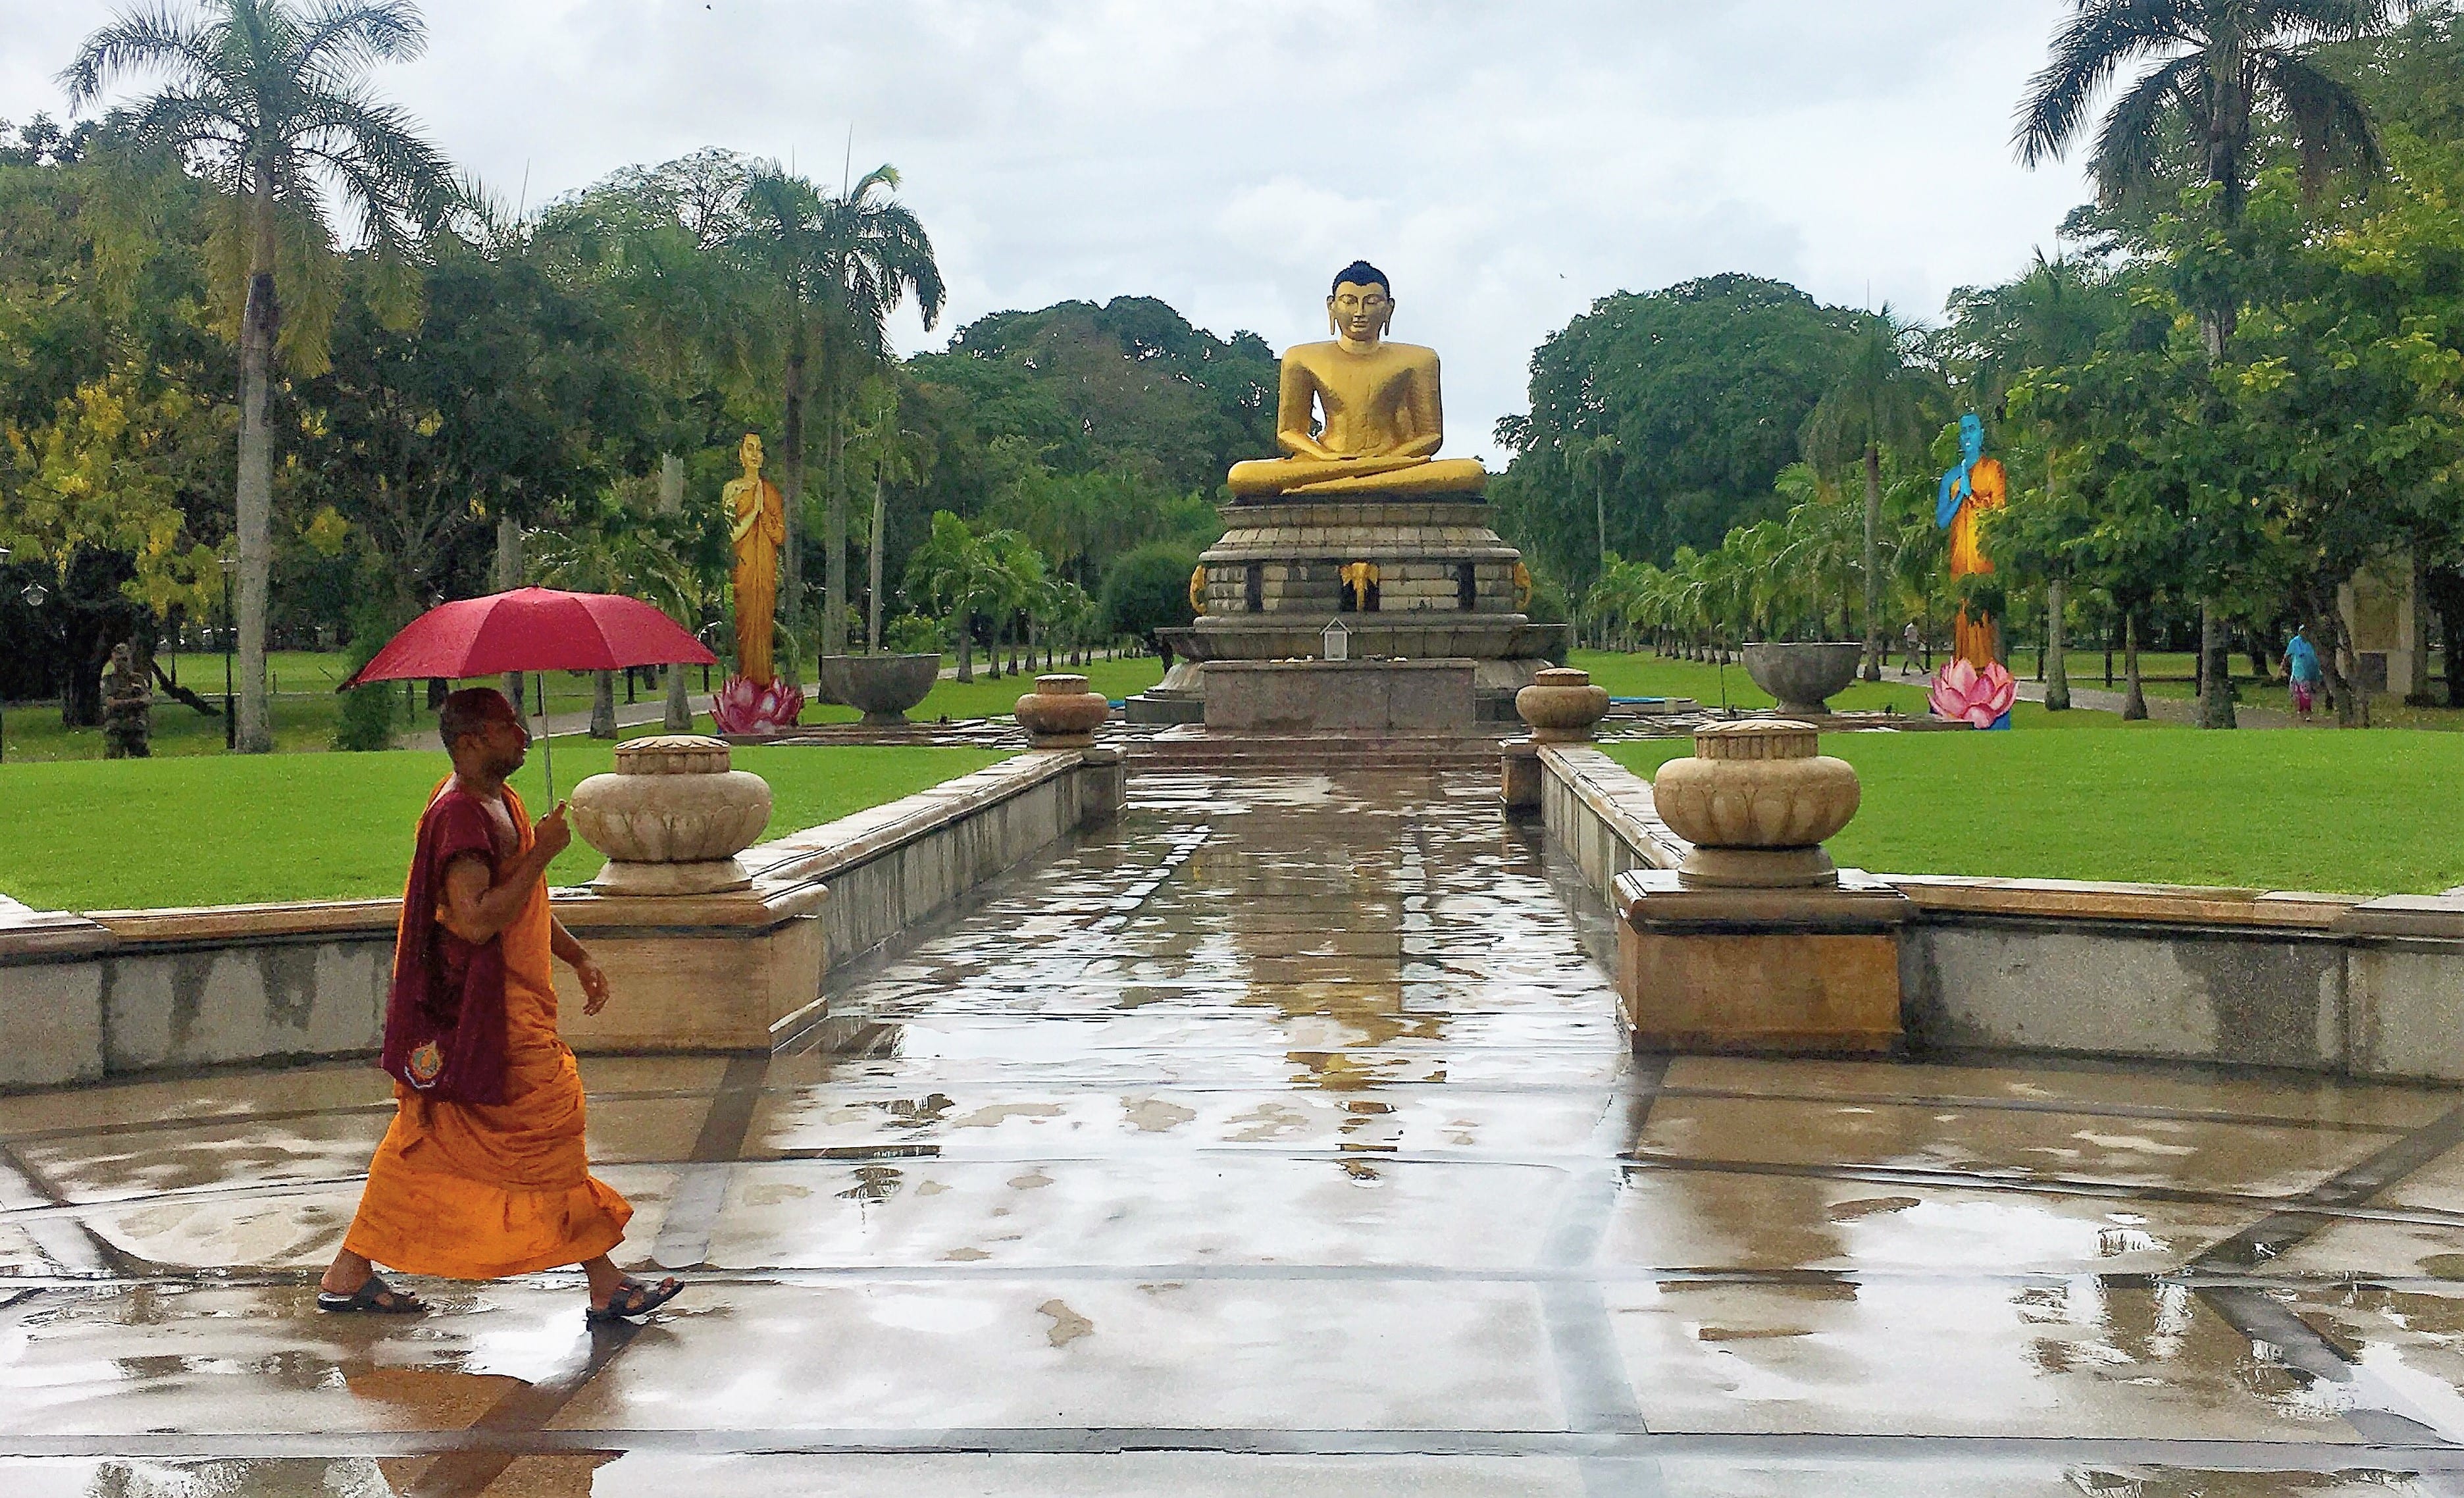 A statue of the Buddha in Colombo, Sri Lanka